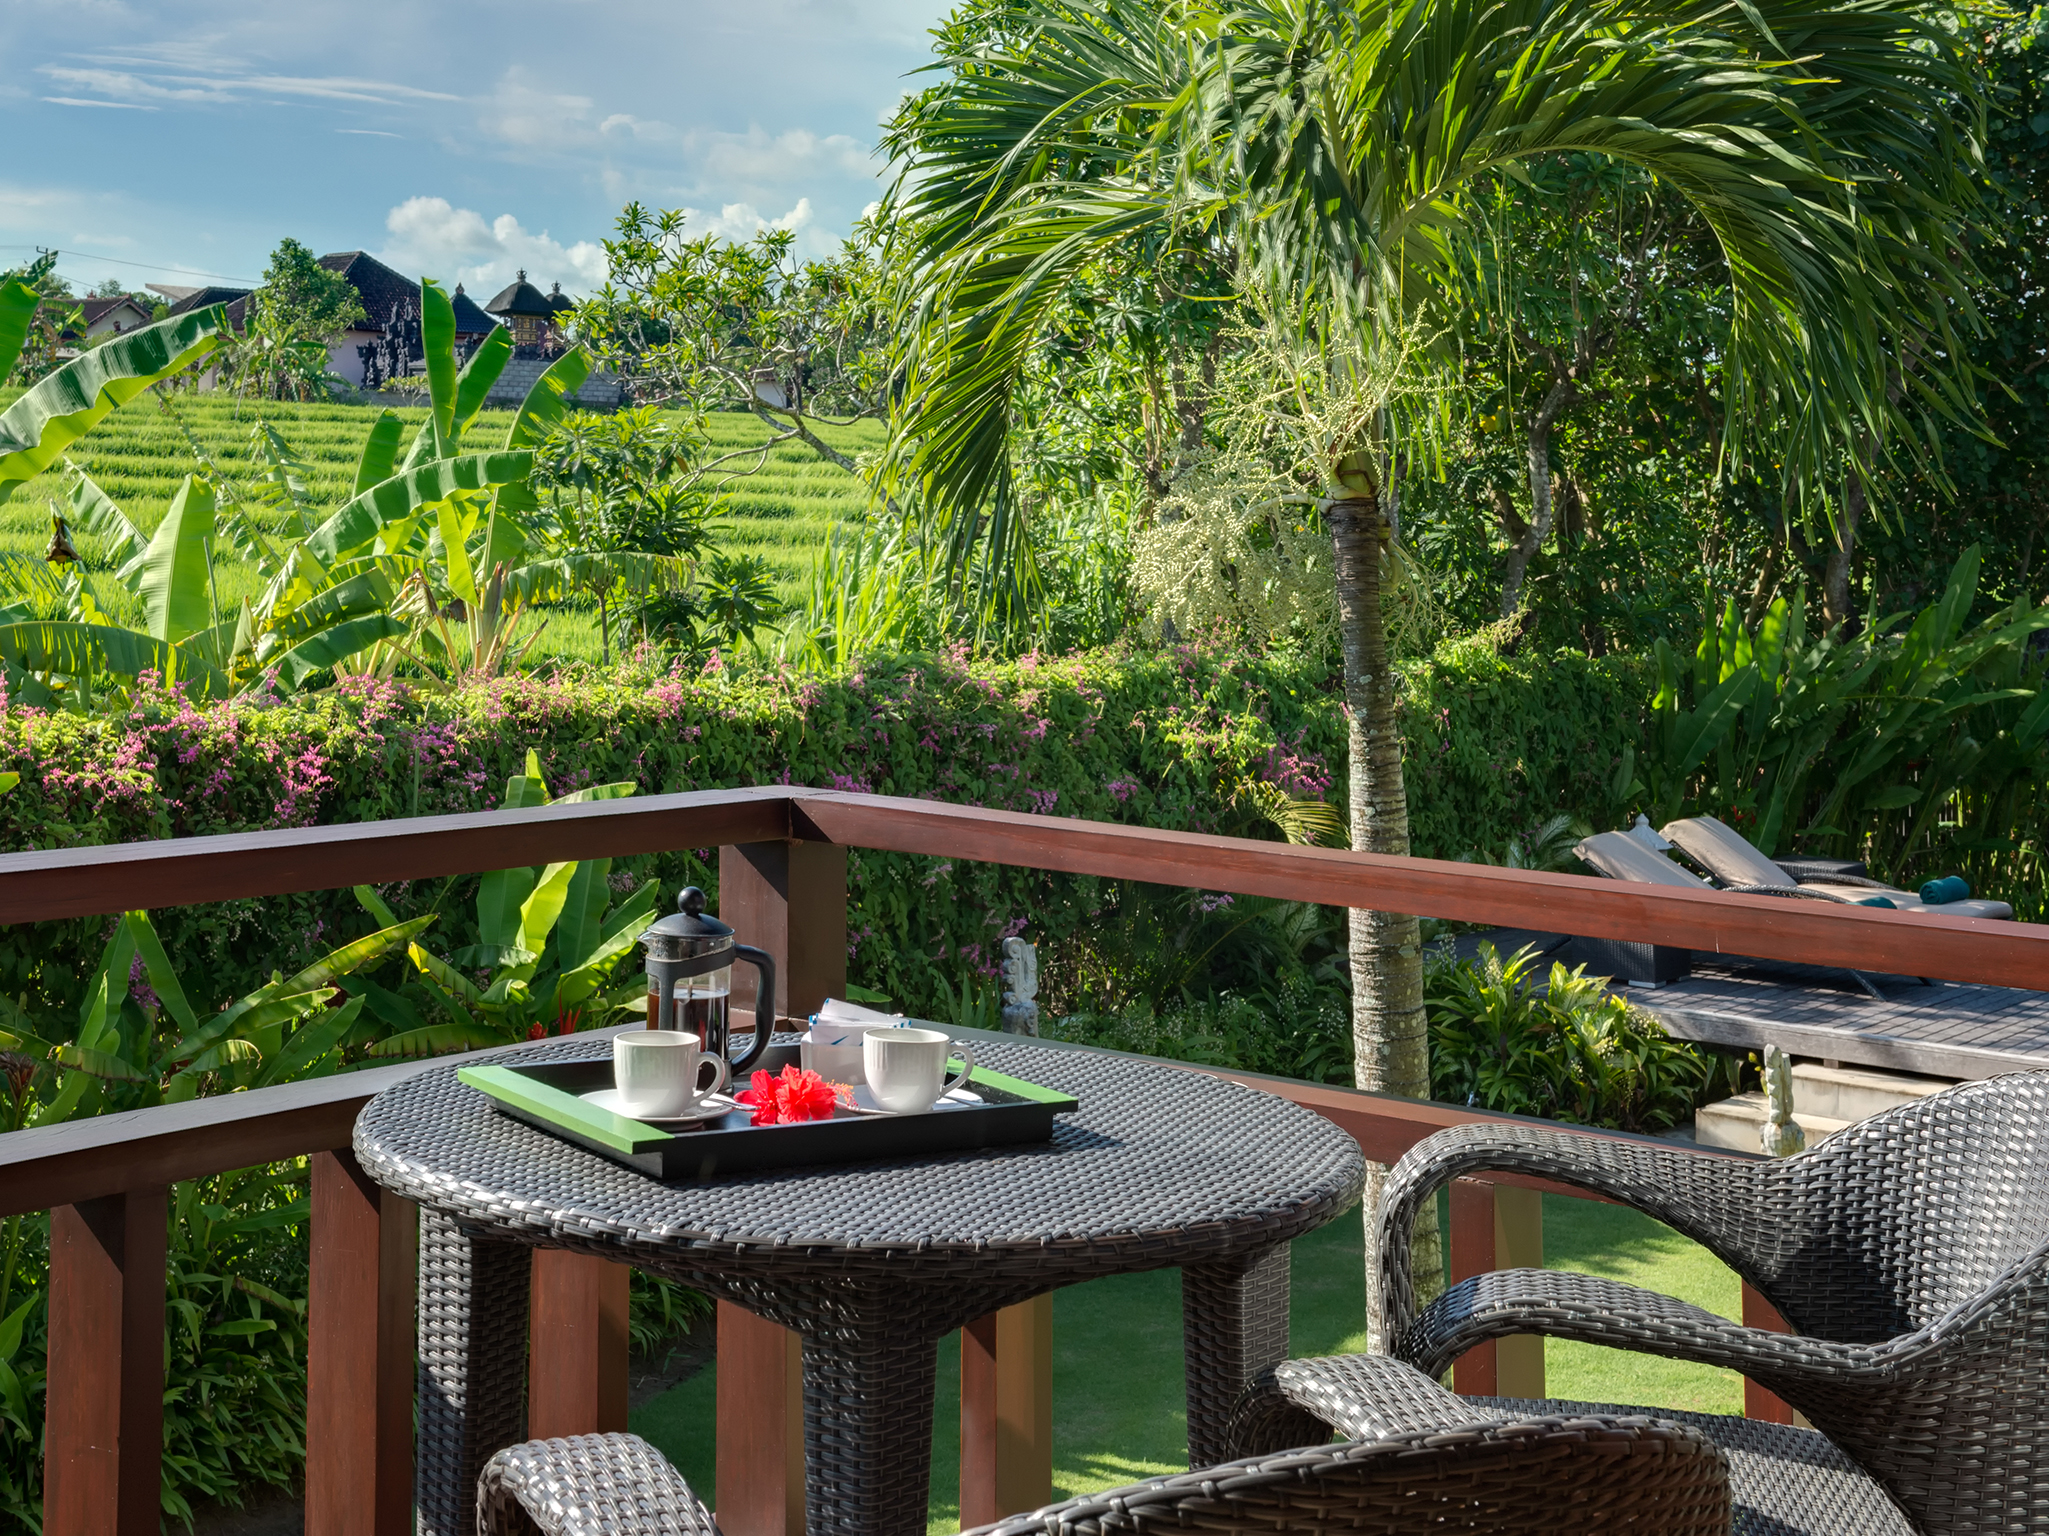 Bendega Nui - Ricefield view from balcony - Bendega Nui, Canggu, Bali